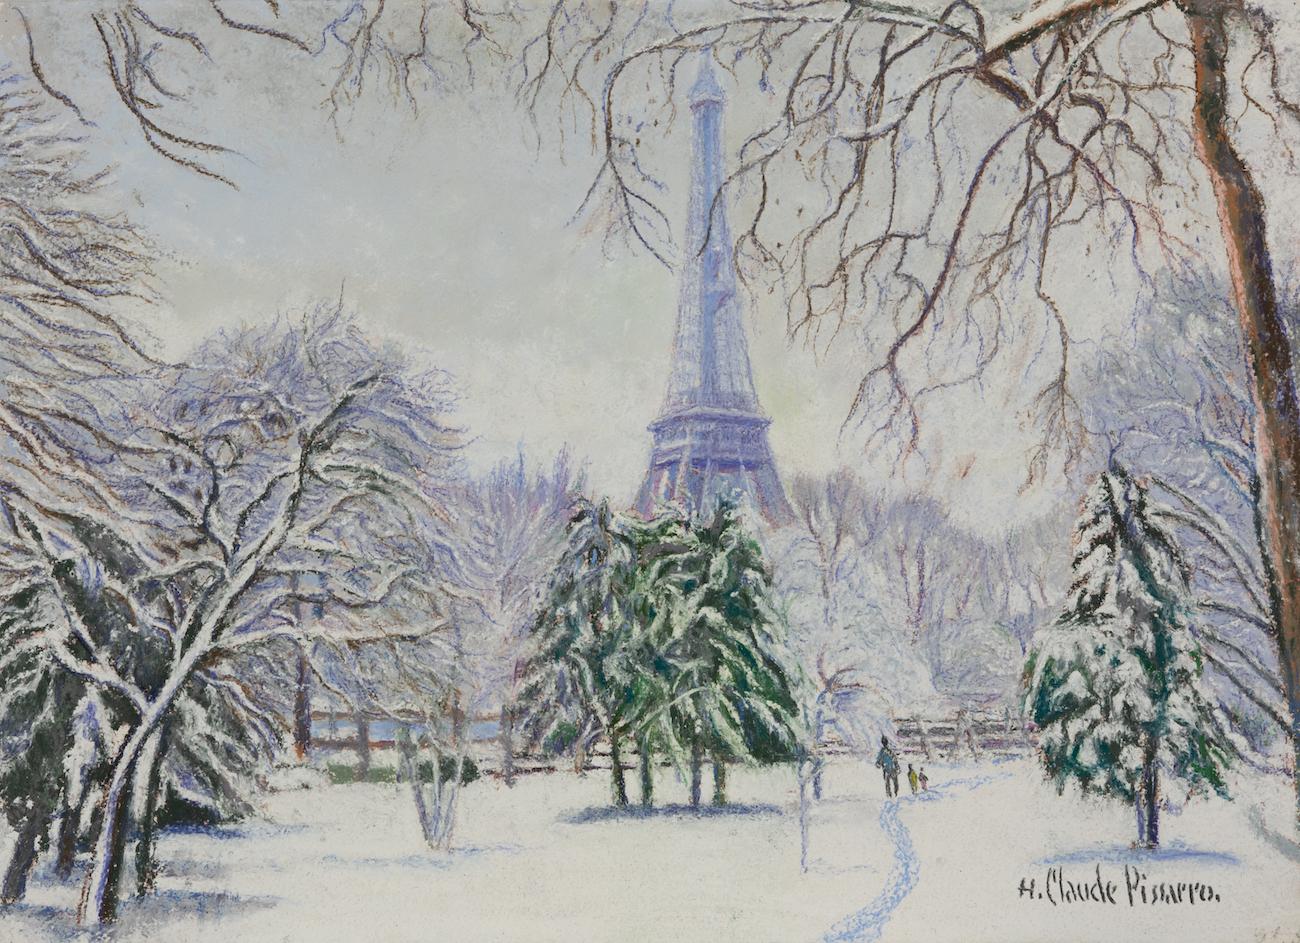 Neige à Paris by H. Claude Pissarro - Snow scene of Paris - Art by Hughes Claude Pissarro